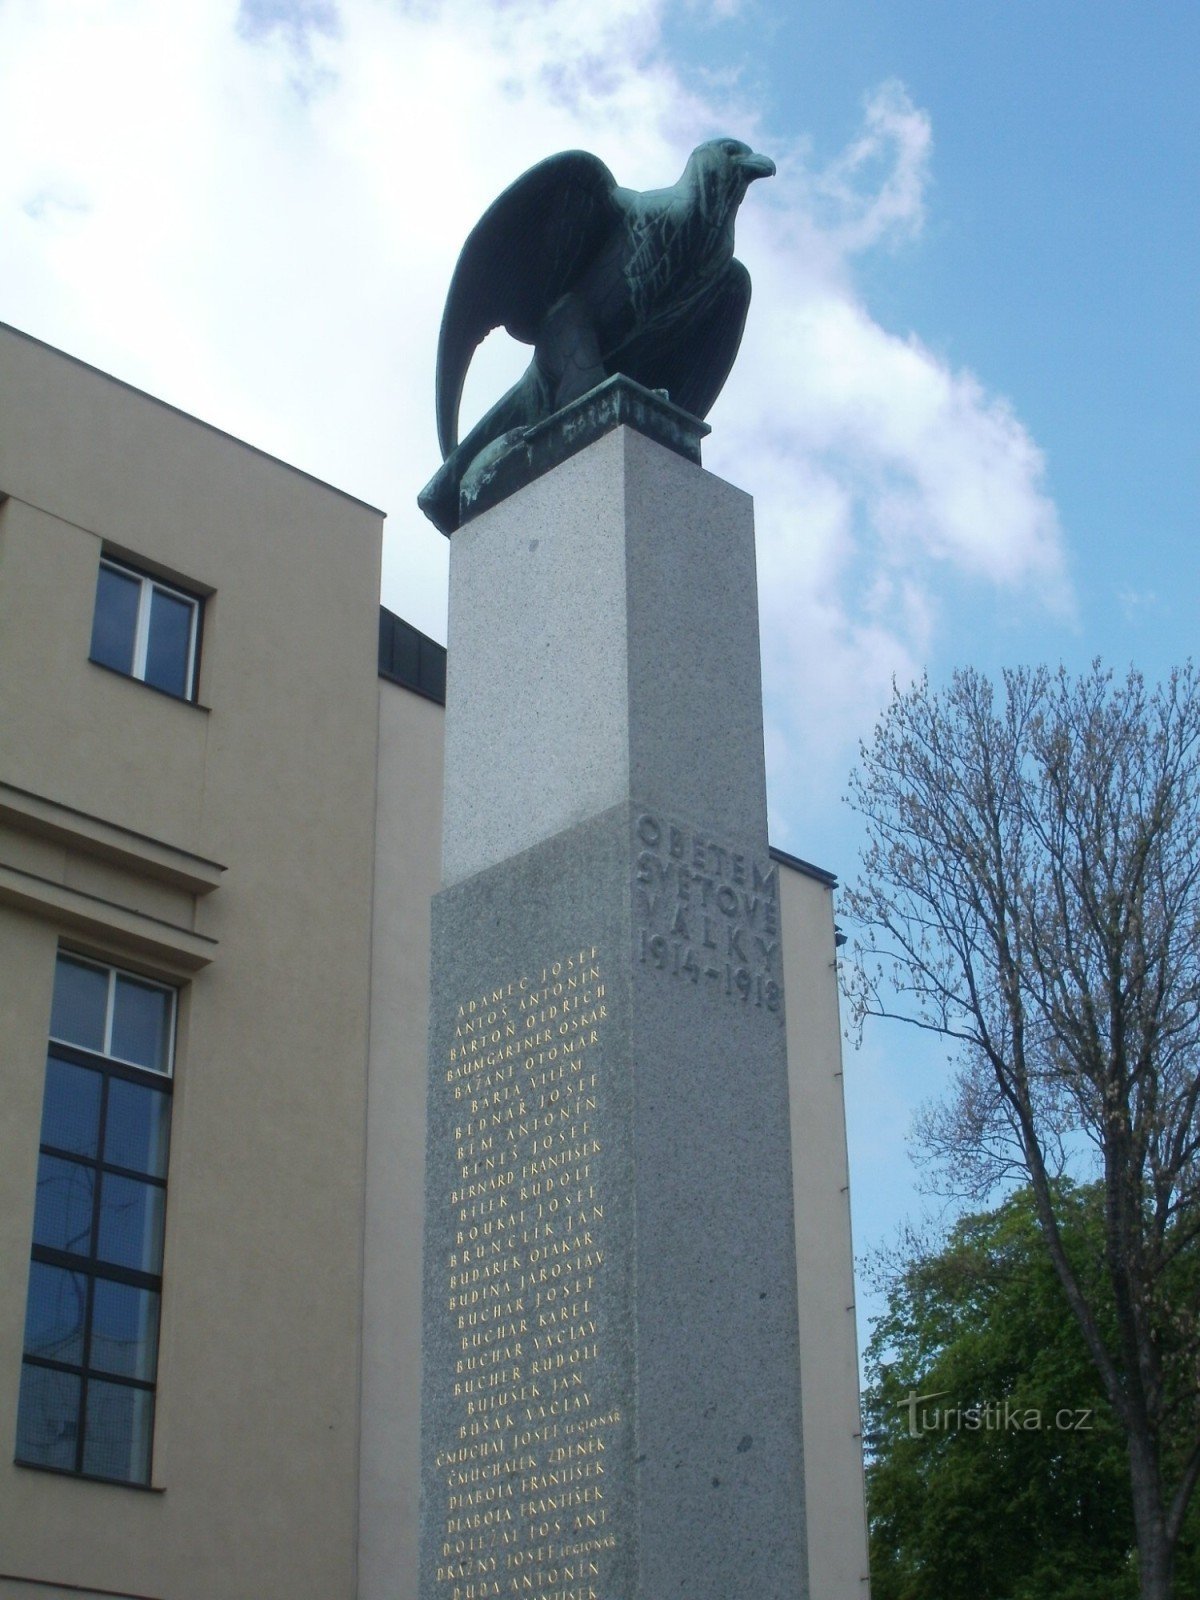 Jilemnice - monumento alle vittime delle guerre